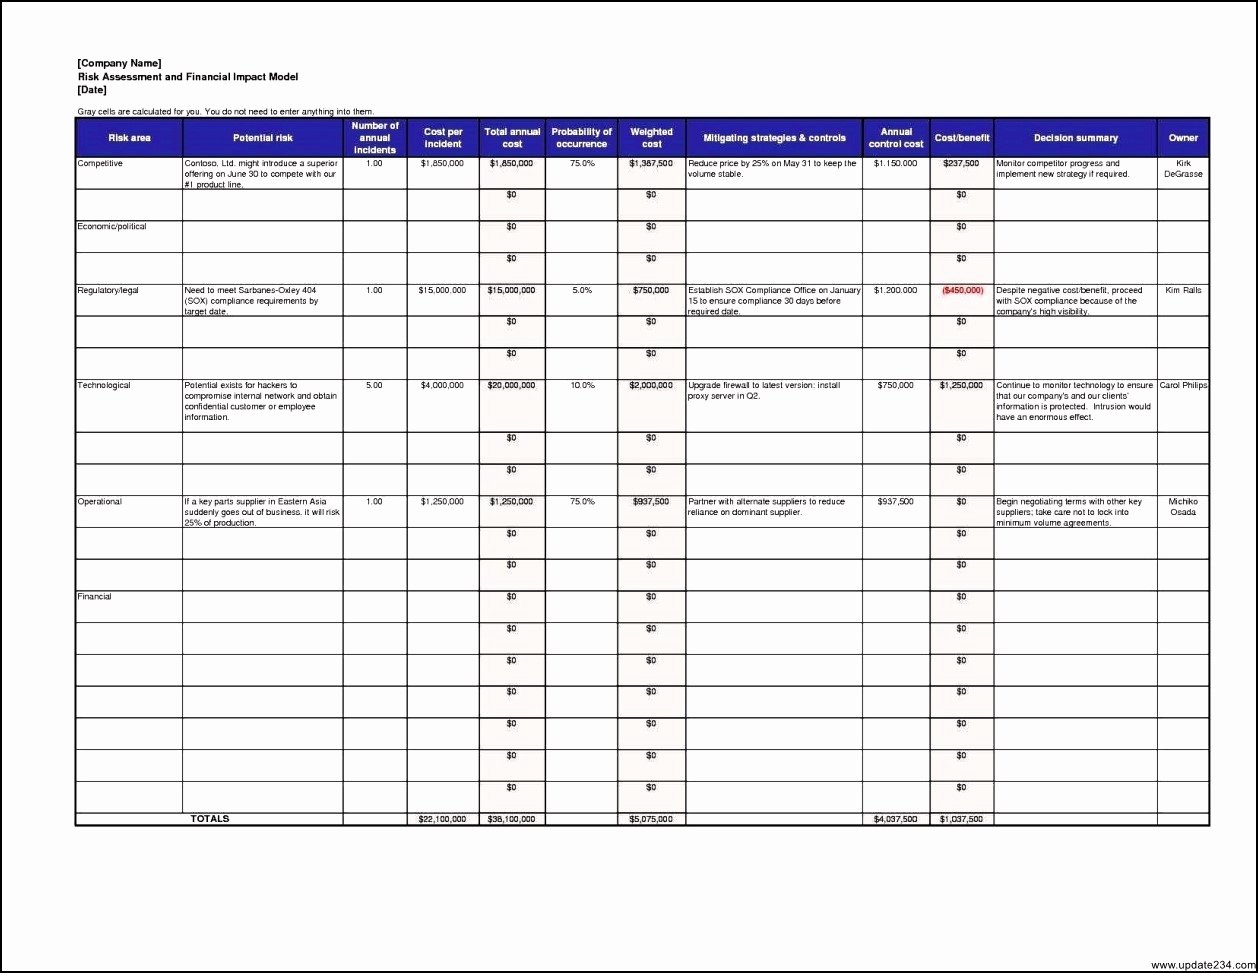 It Risk assessment Template Luxury Risk assessment Template Excel Template Update234